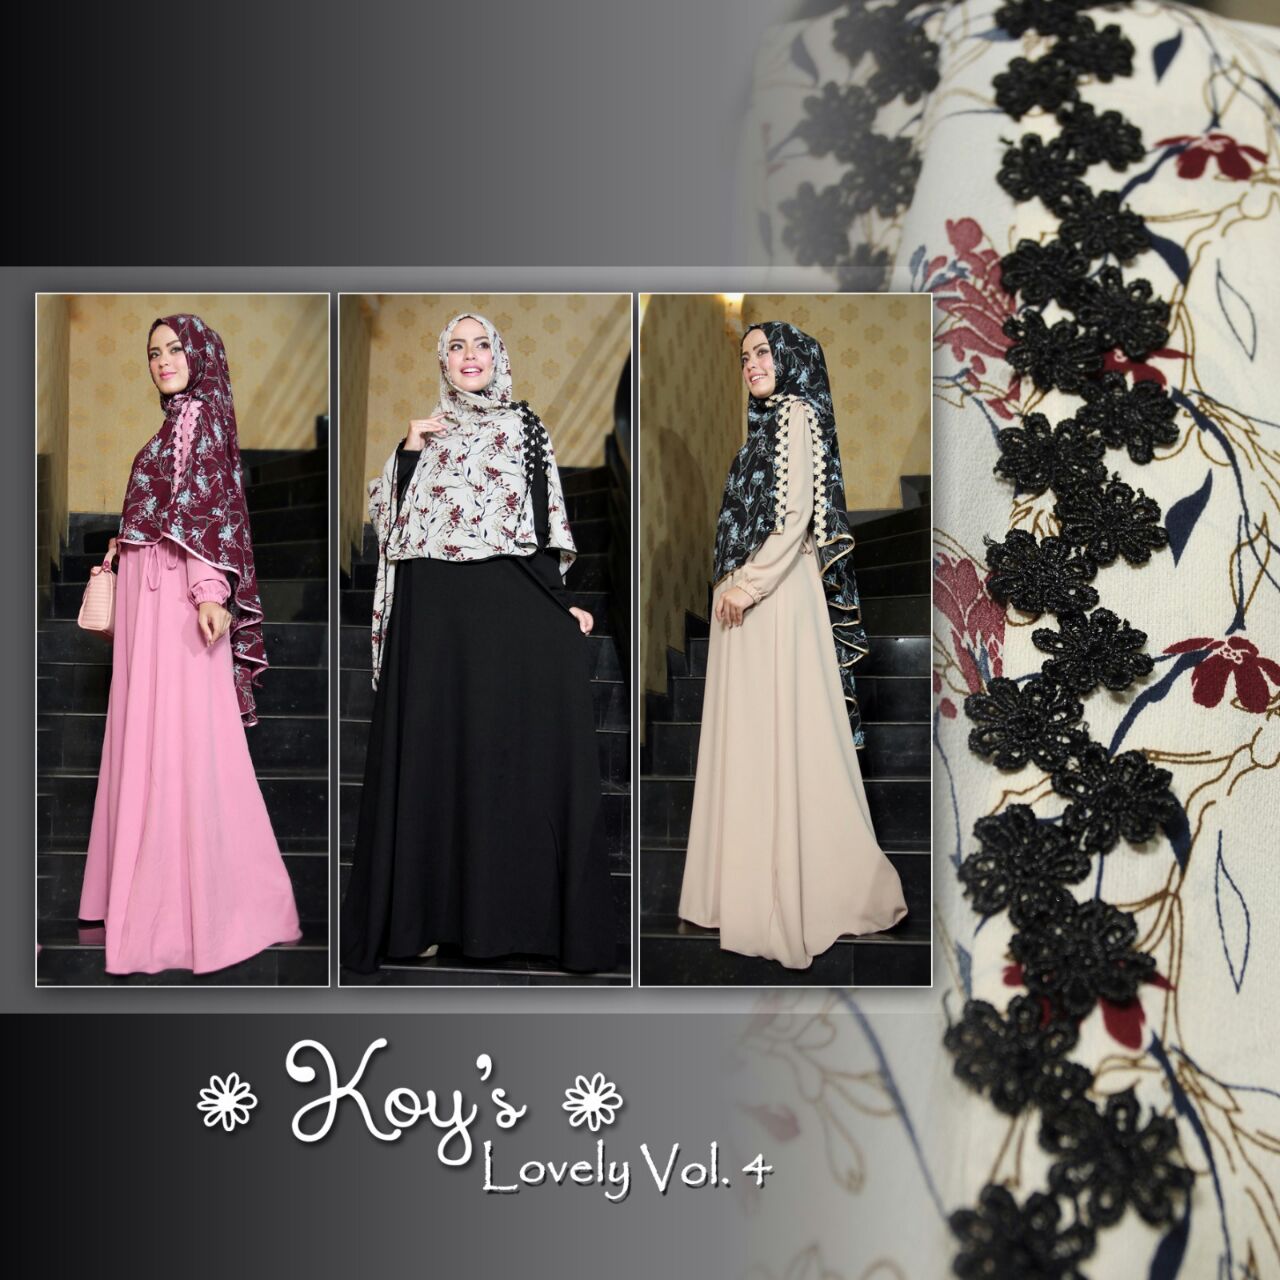 Jual Baju Muslim Gamis Terbaru Lovely Syari Vol 4 By Koys